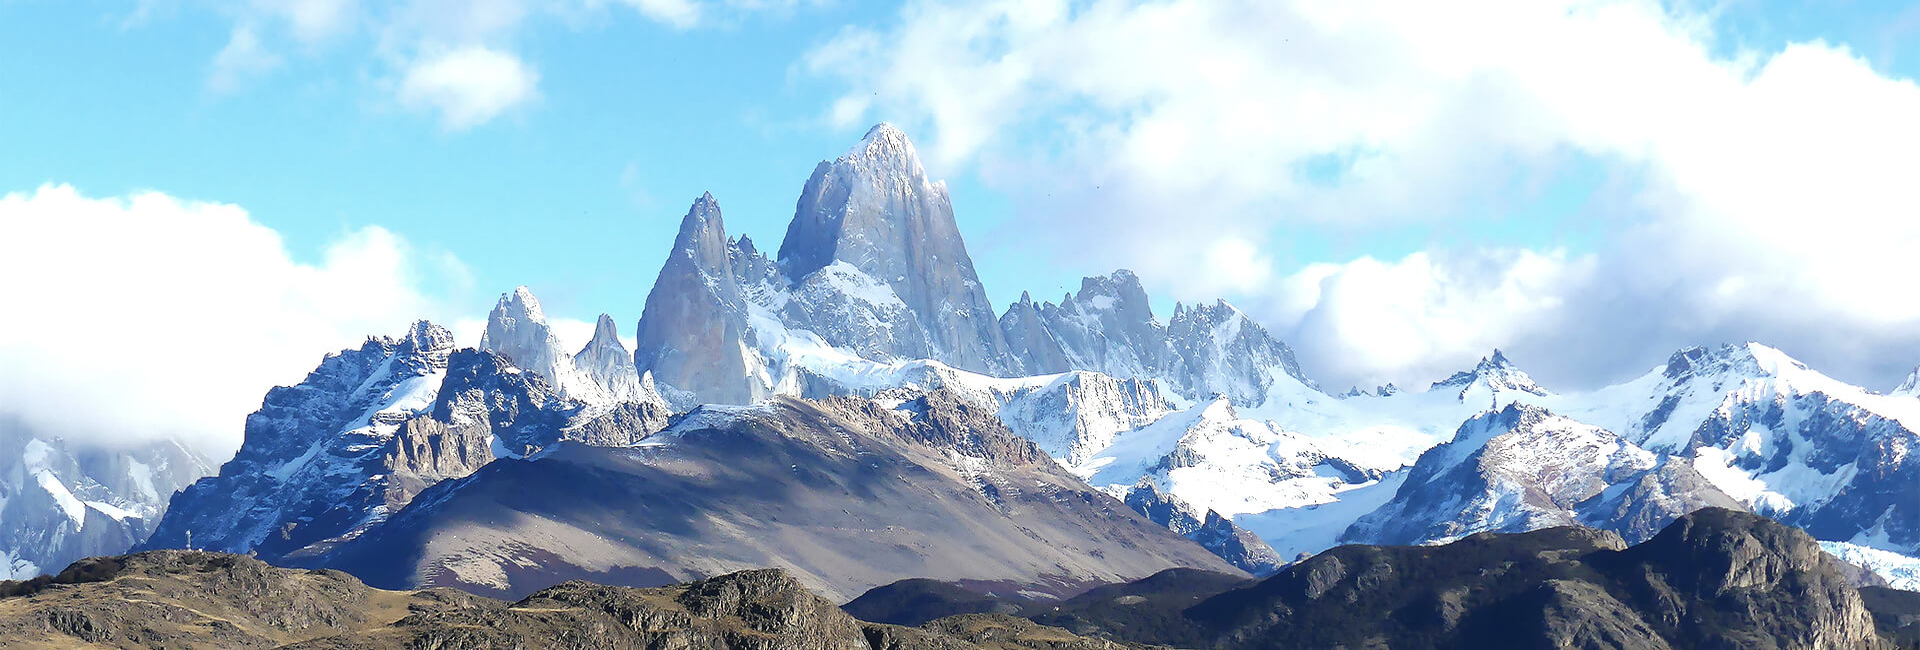 Fitz Roy Massif, Patagonia, Los Glaciares National Park